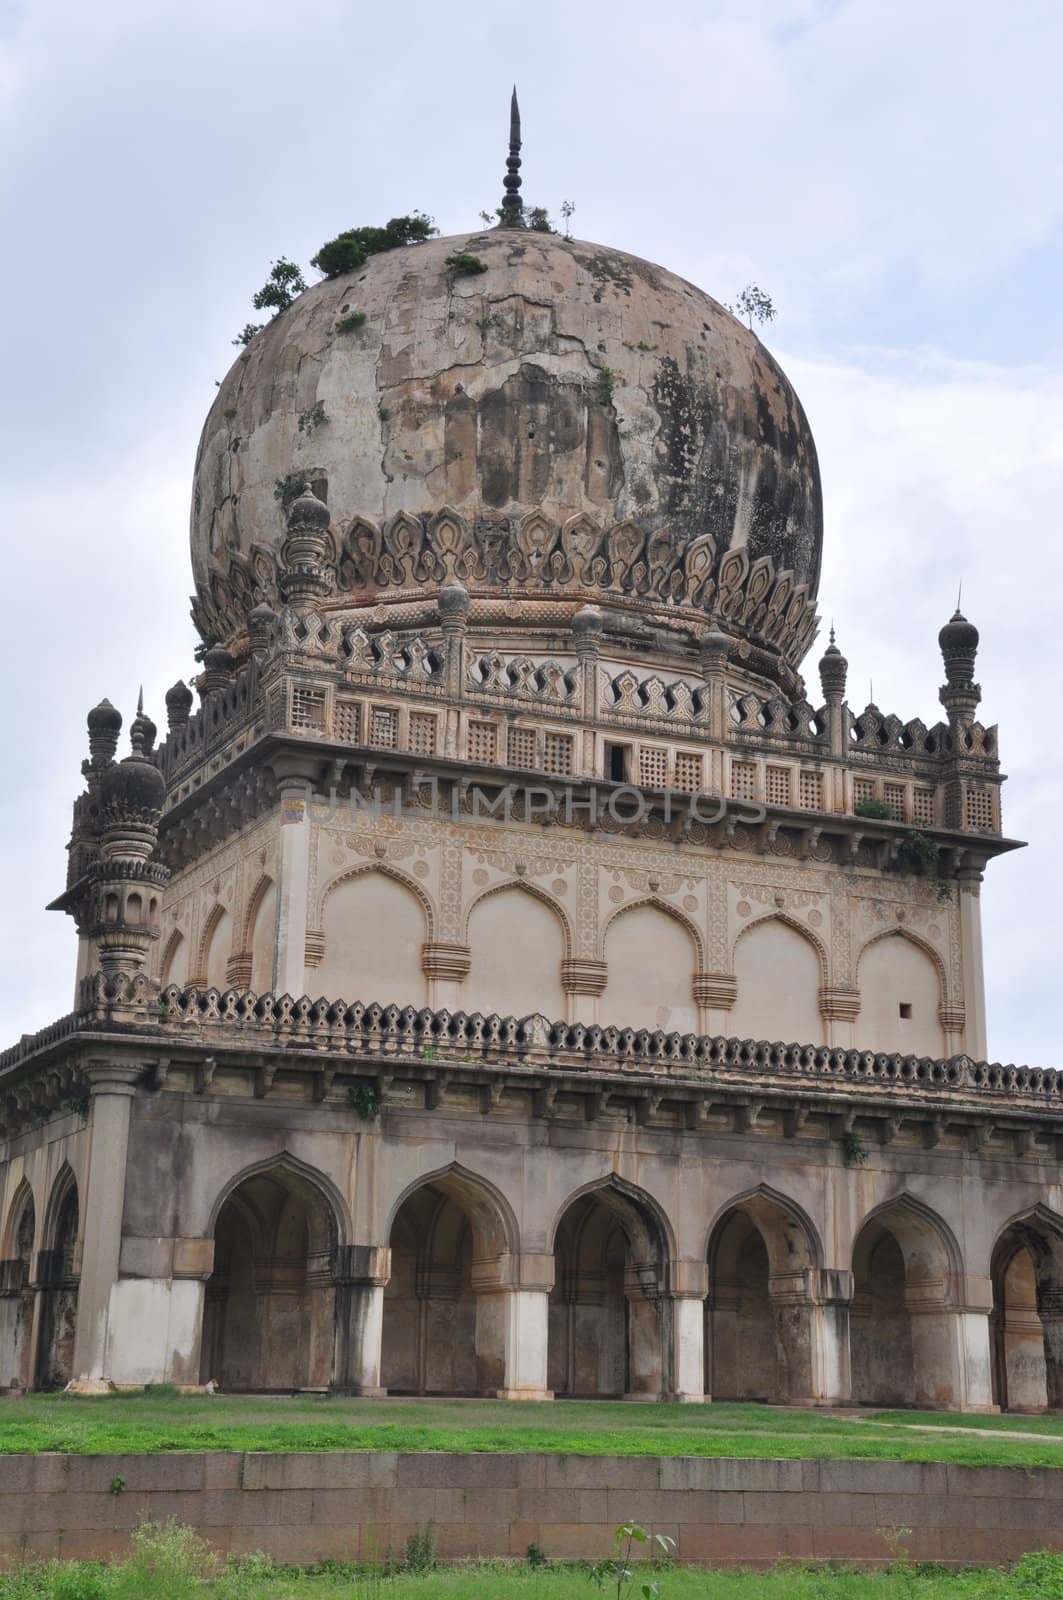 Qutb Shahi Tombs in Hyderabad in Andhra Pradesh, India